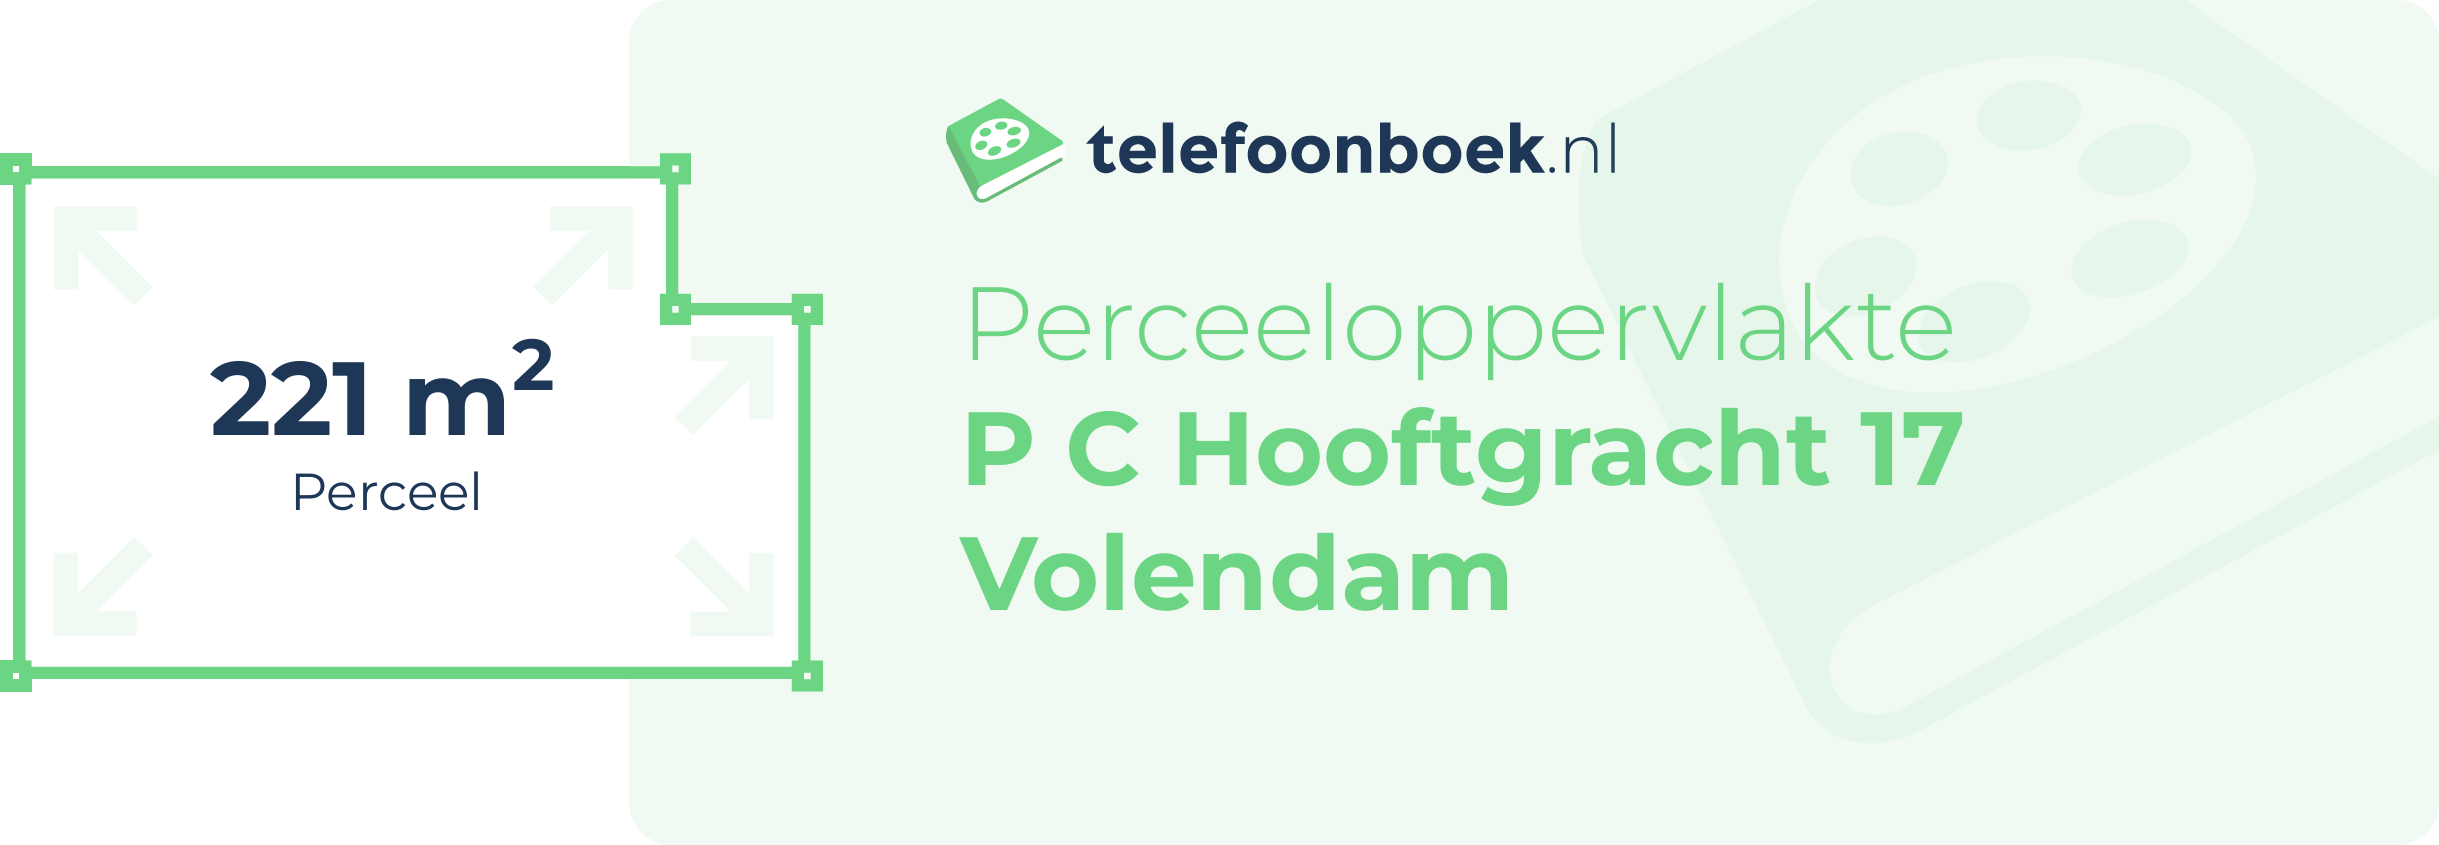 Perceeloppervlakte P C Hooftgracht 17 Volendam